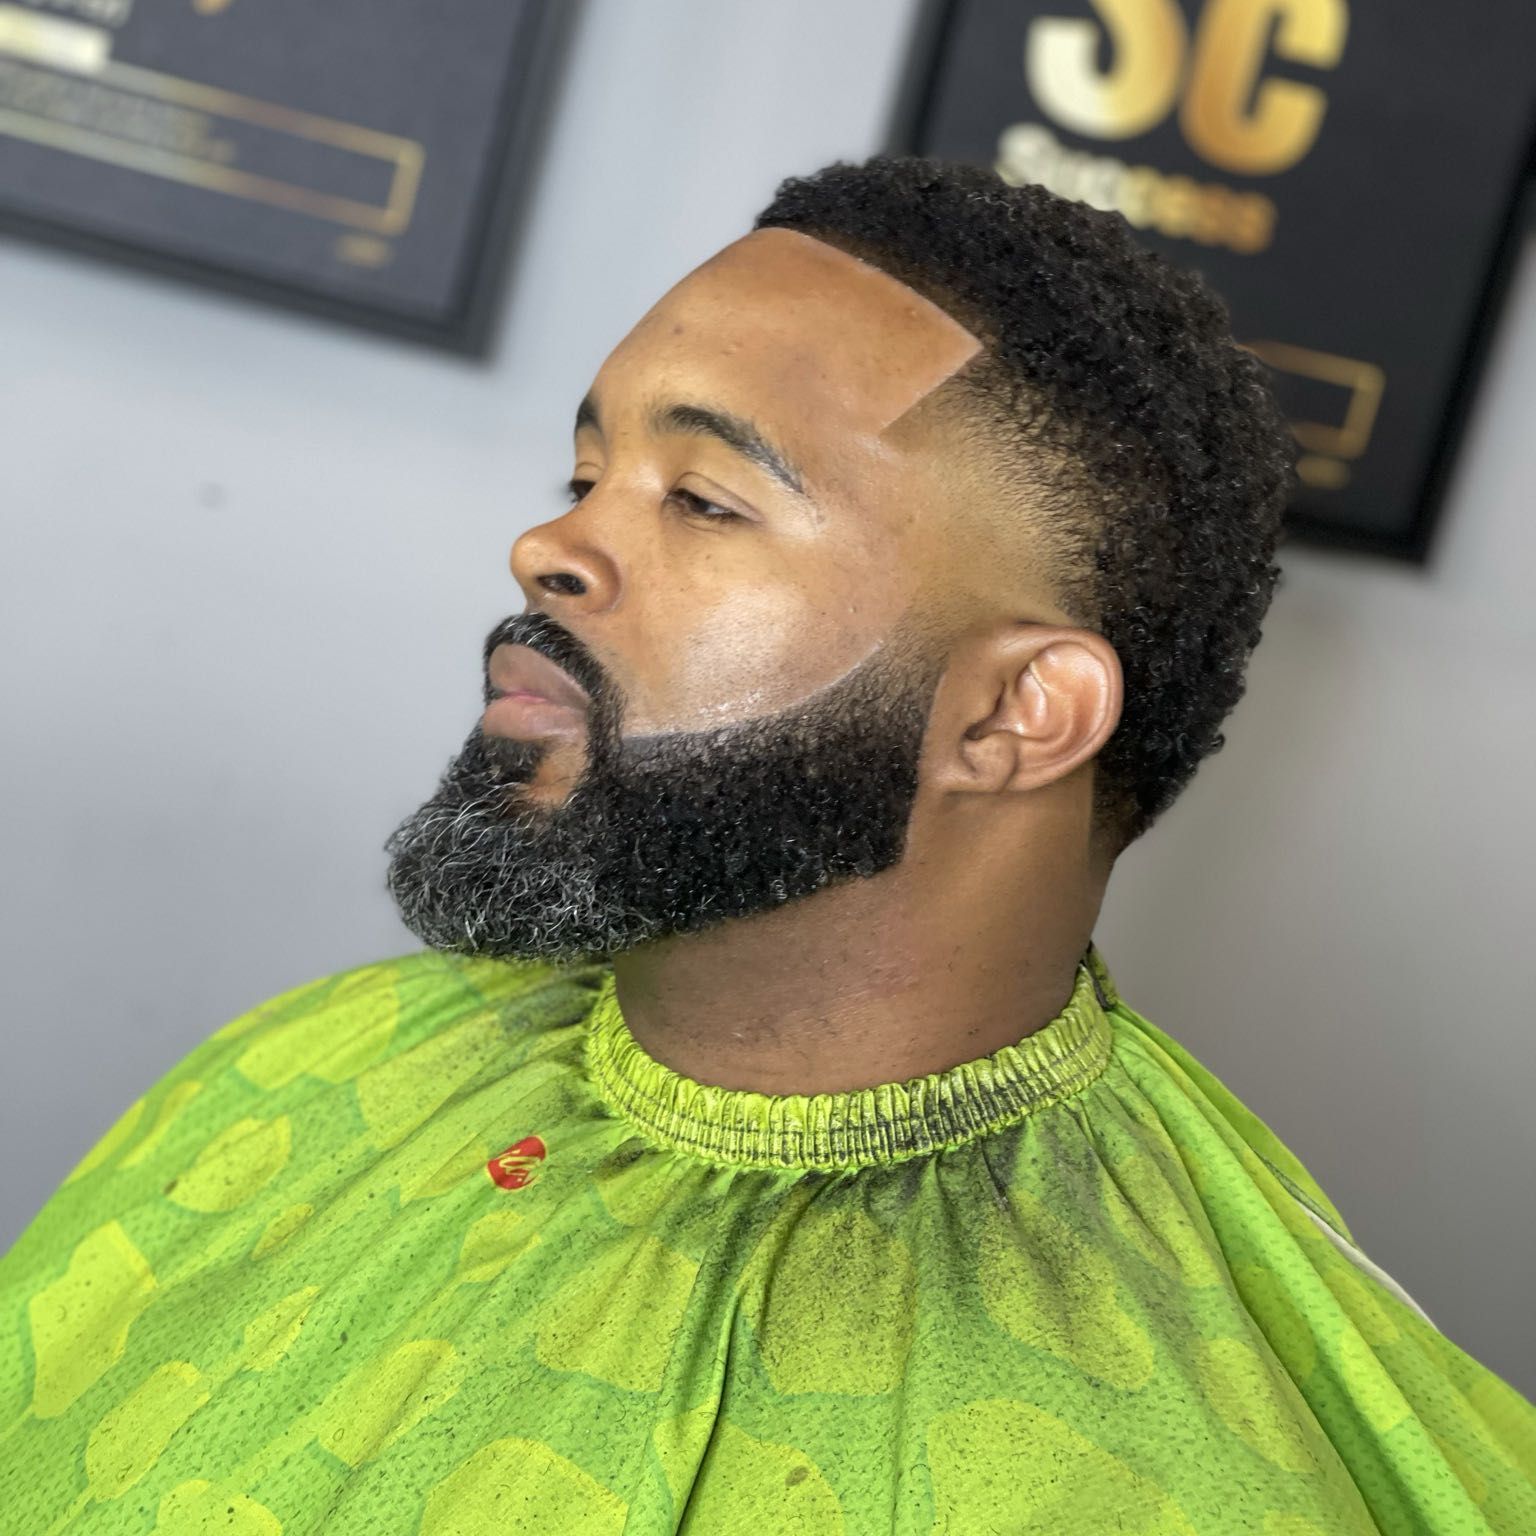 Mens haircut + Beard shaping portfolio